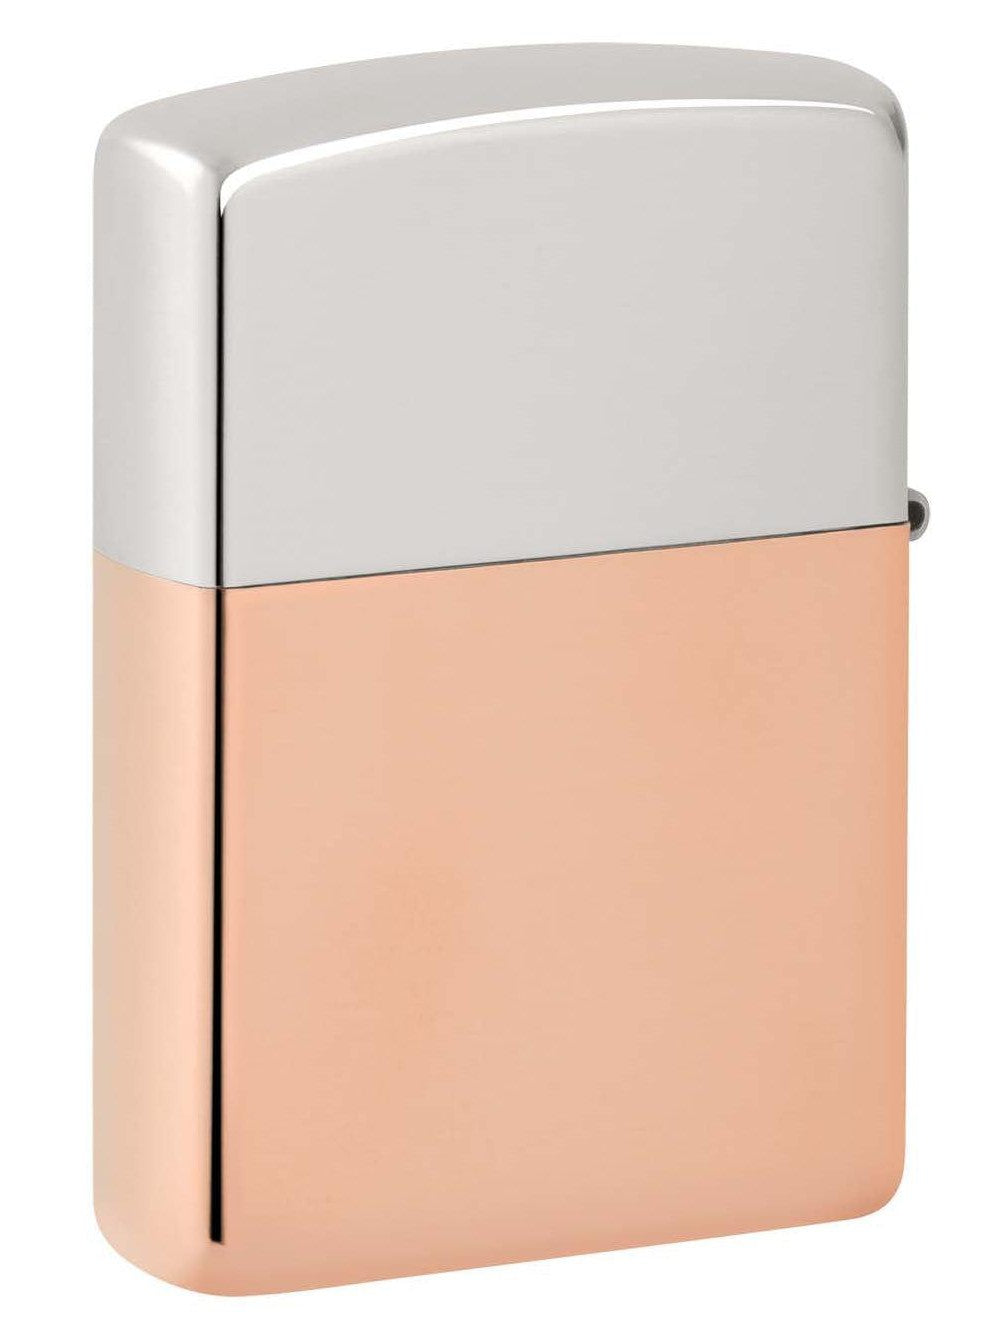 Zippo Lighter: Bimetal, Sterling Silver Lid and Copper Base - 48694